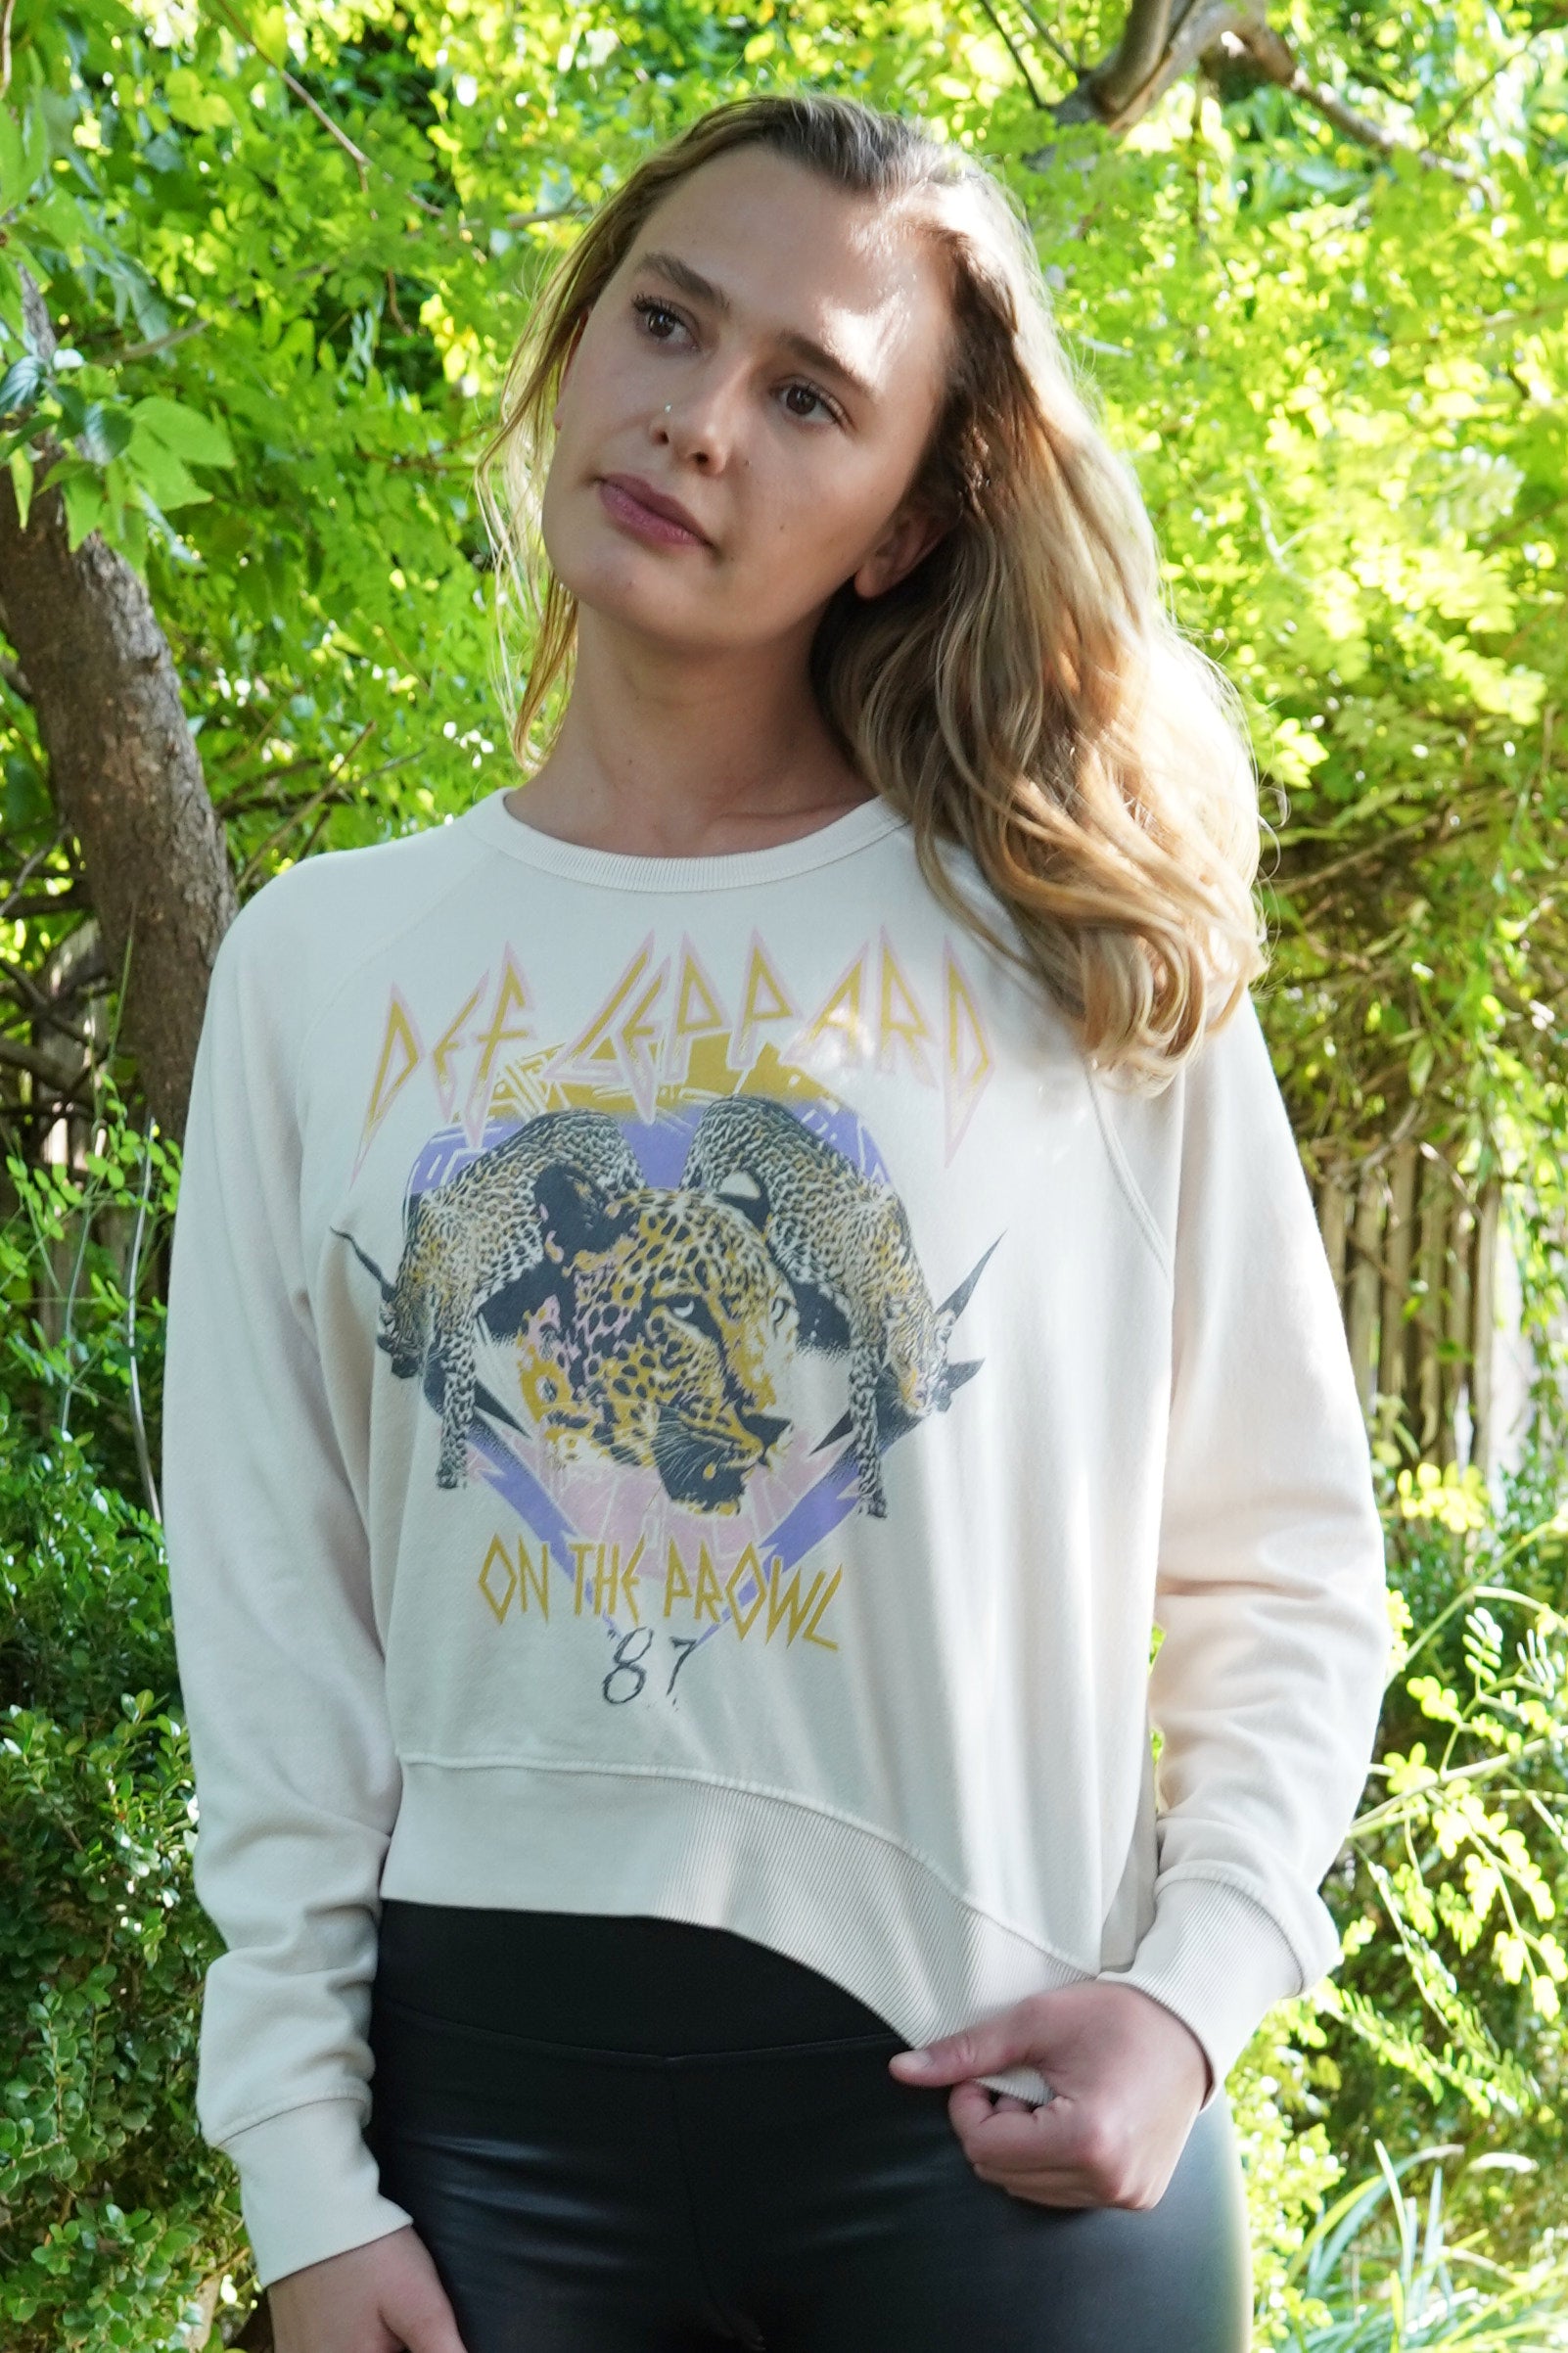 Def Leppard "On the Prowl" Varsity Sweatshirt - The Flaunt